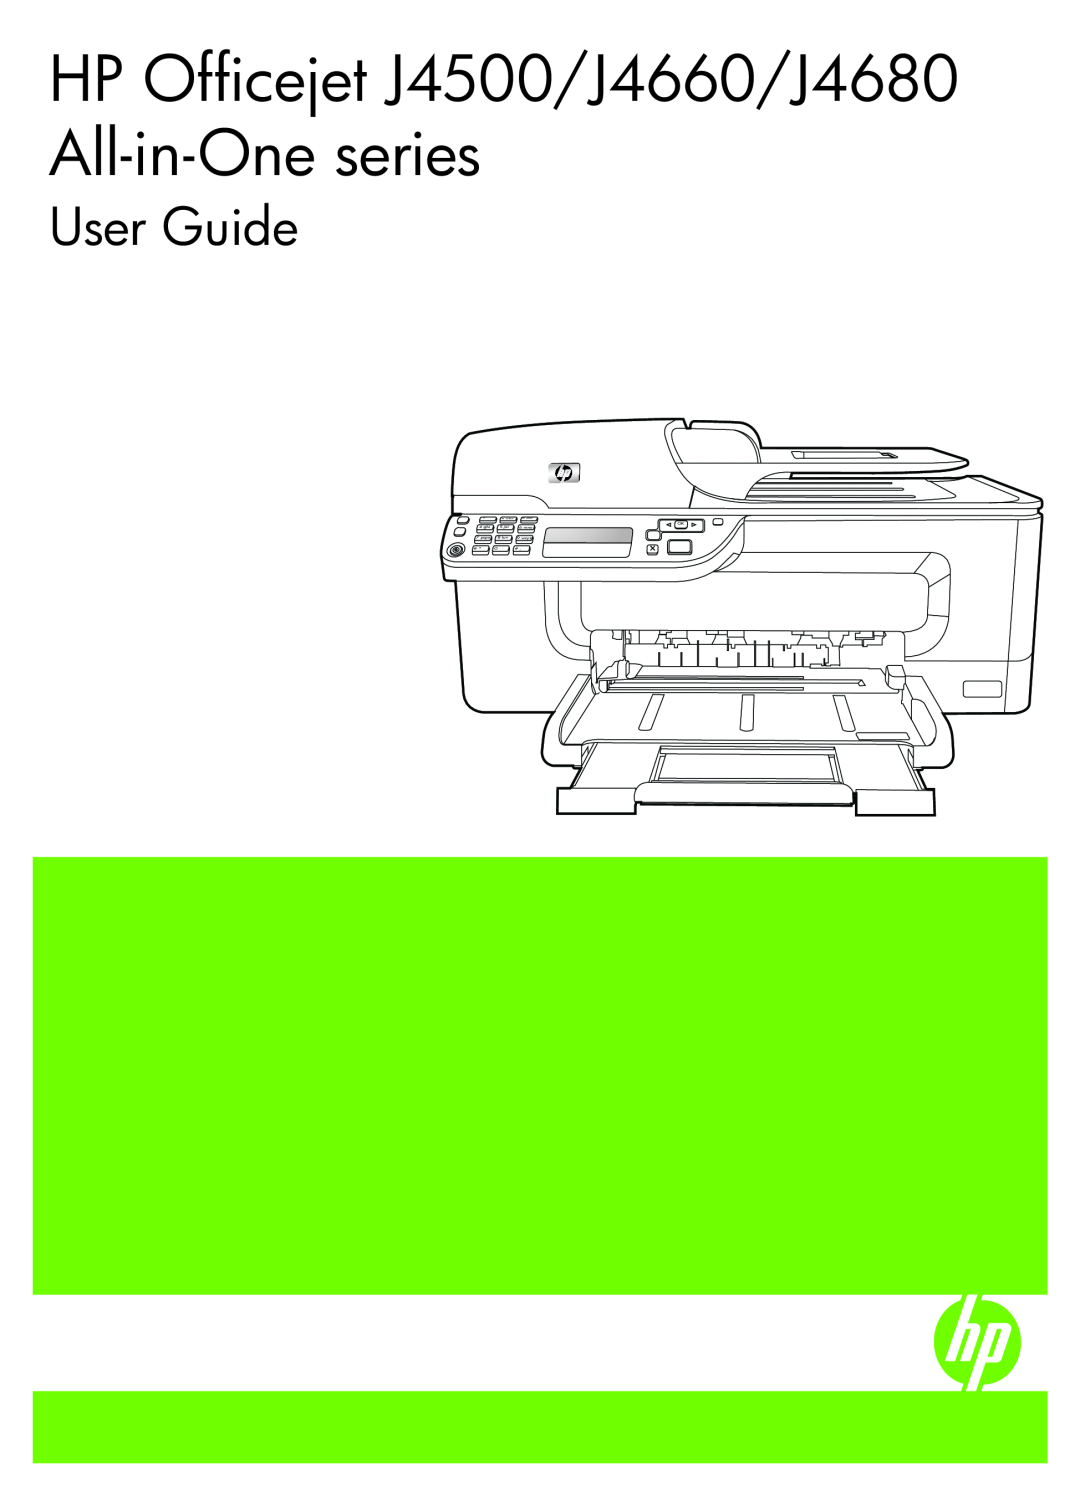 HP manual User Guide, Podręcznik użytkownika, HP Officejet J4500/J4660/J4680 All-in-One series, 4 ghi, 5 jkl, 6 mno 